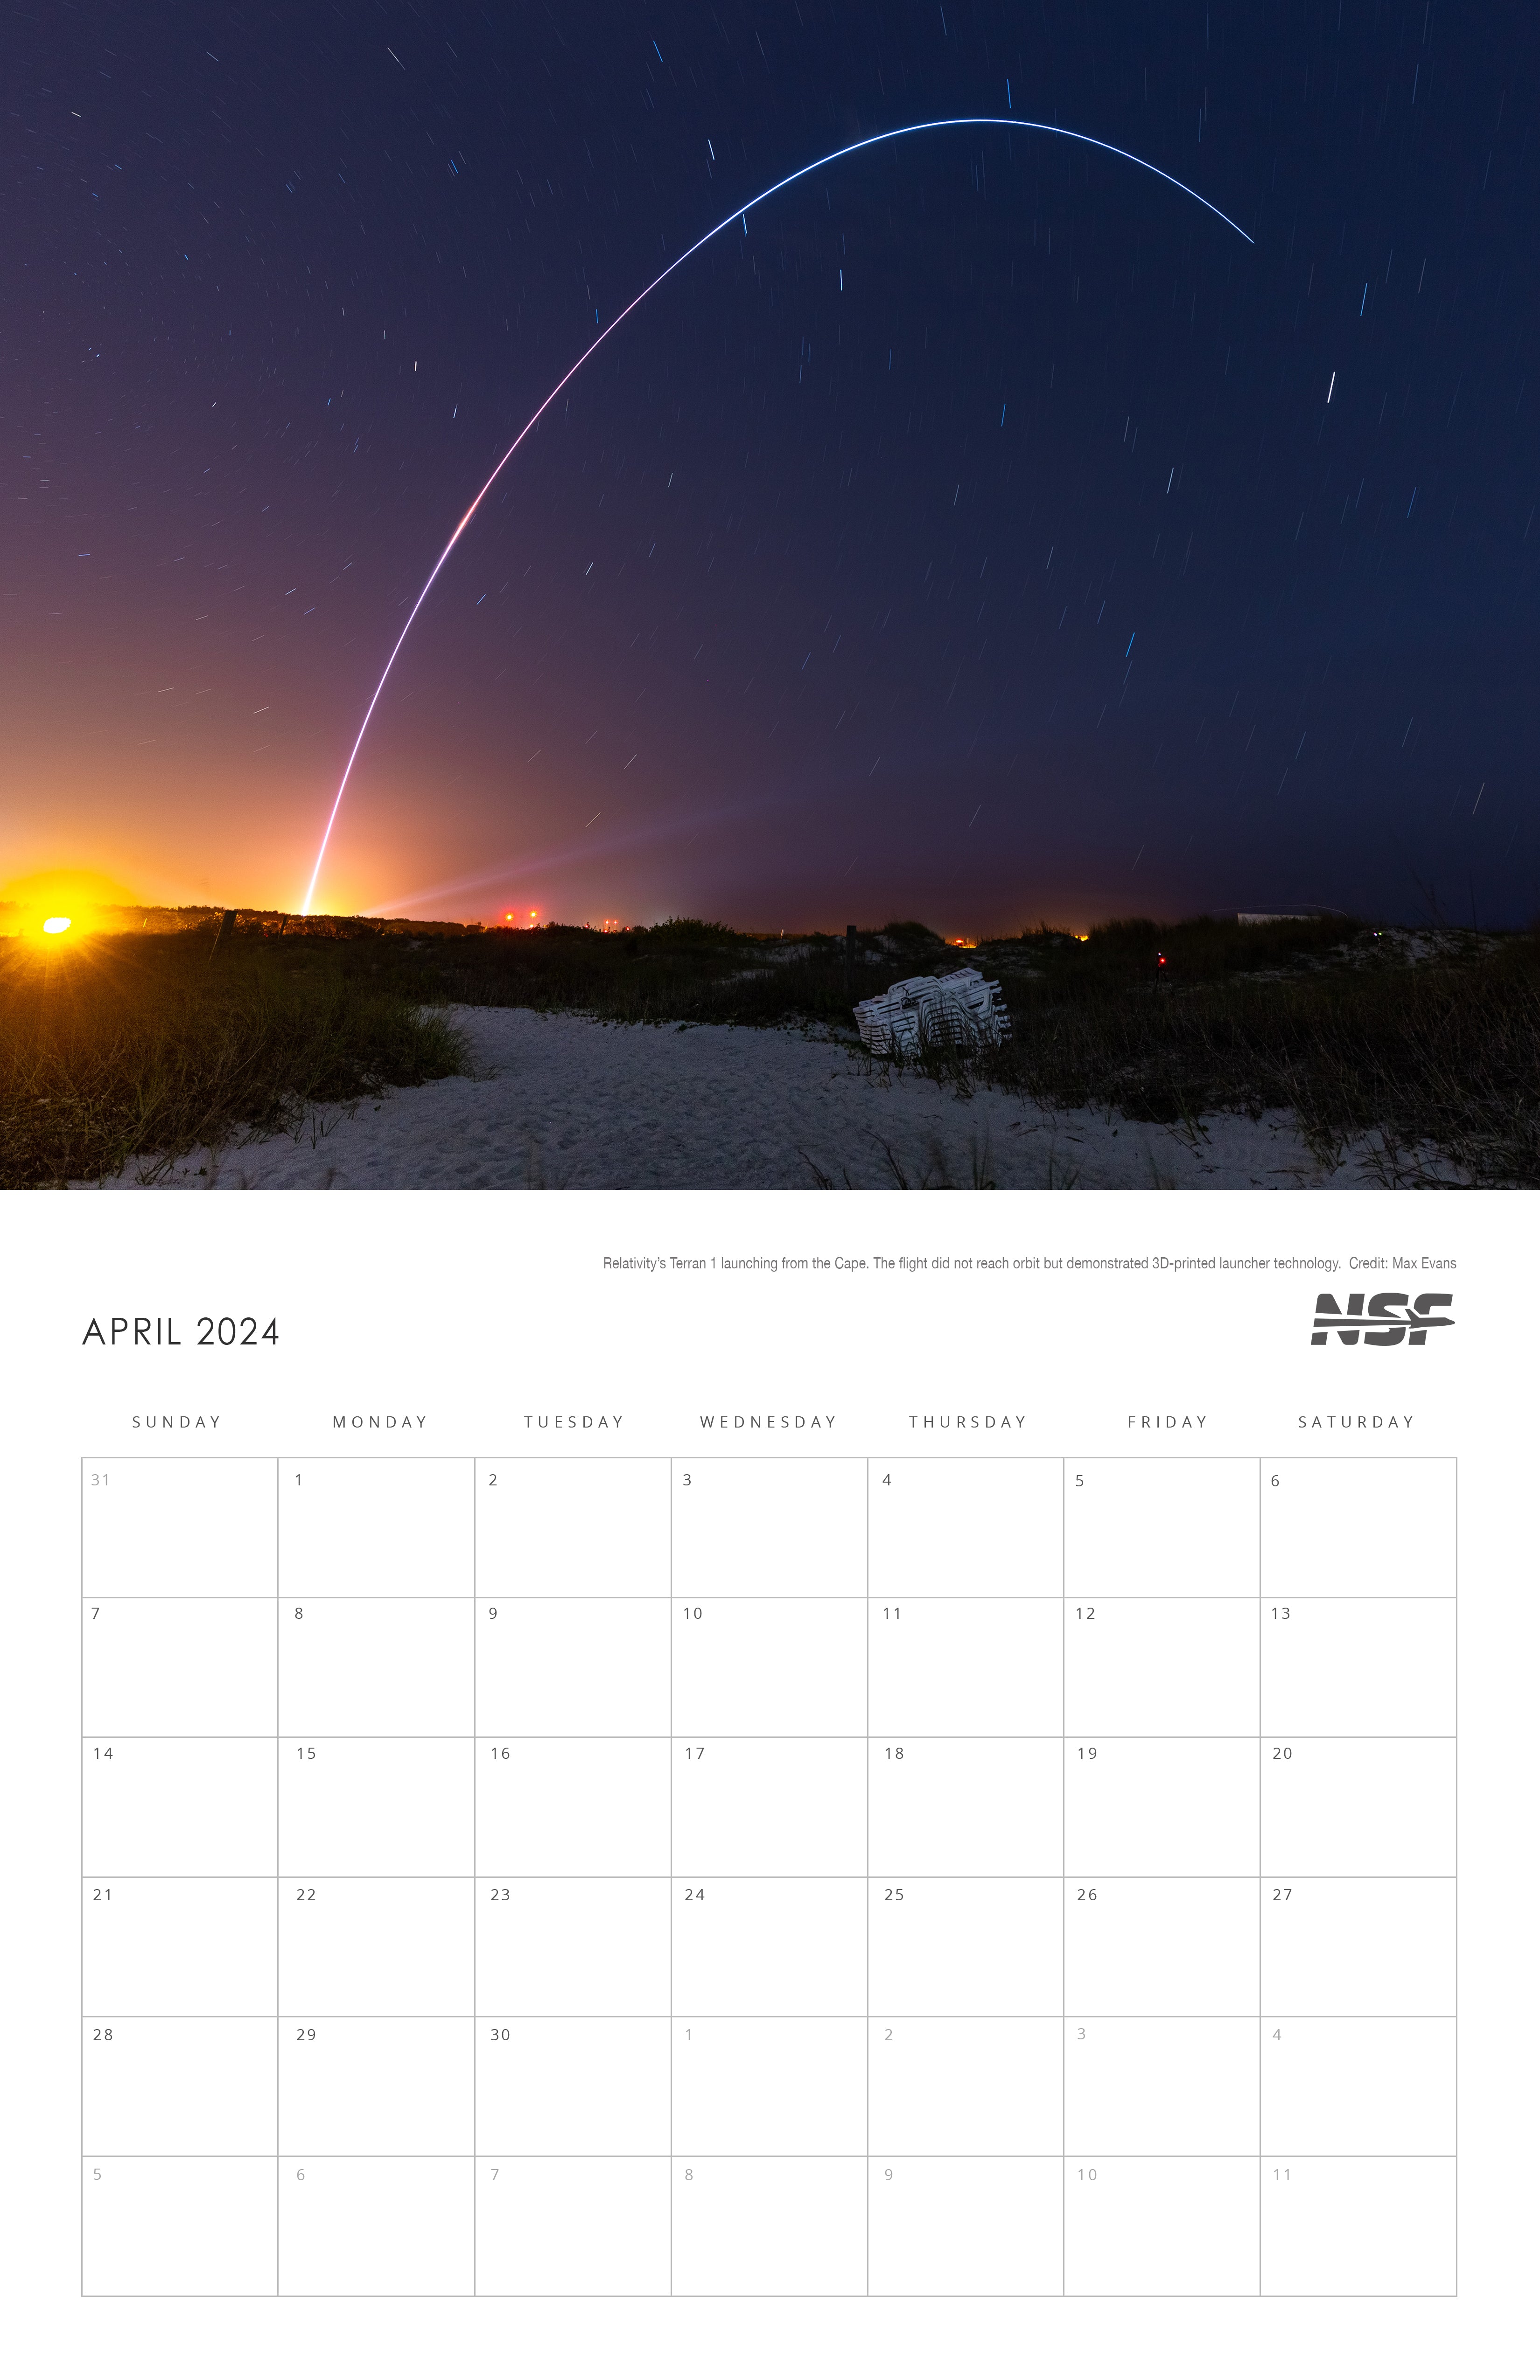 NSF Spaceflight Calendar 2024